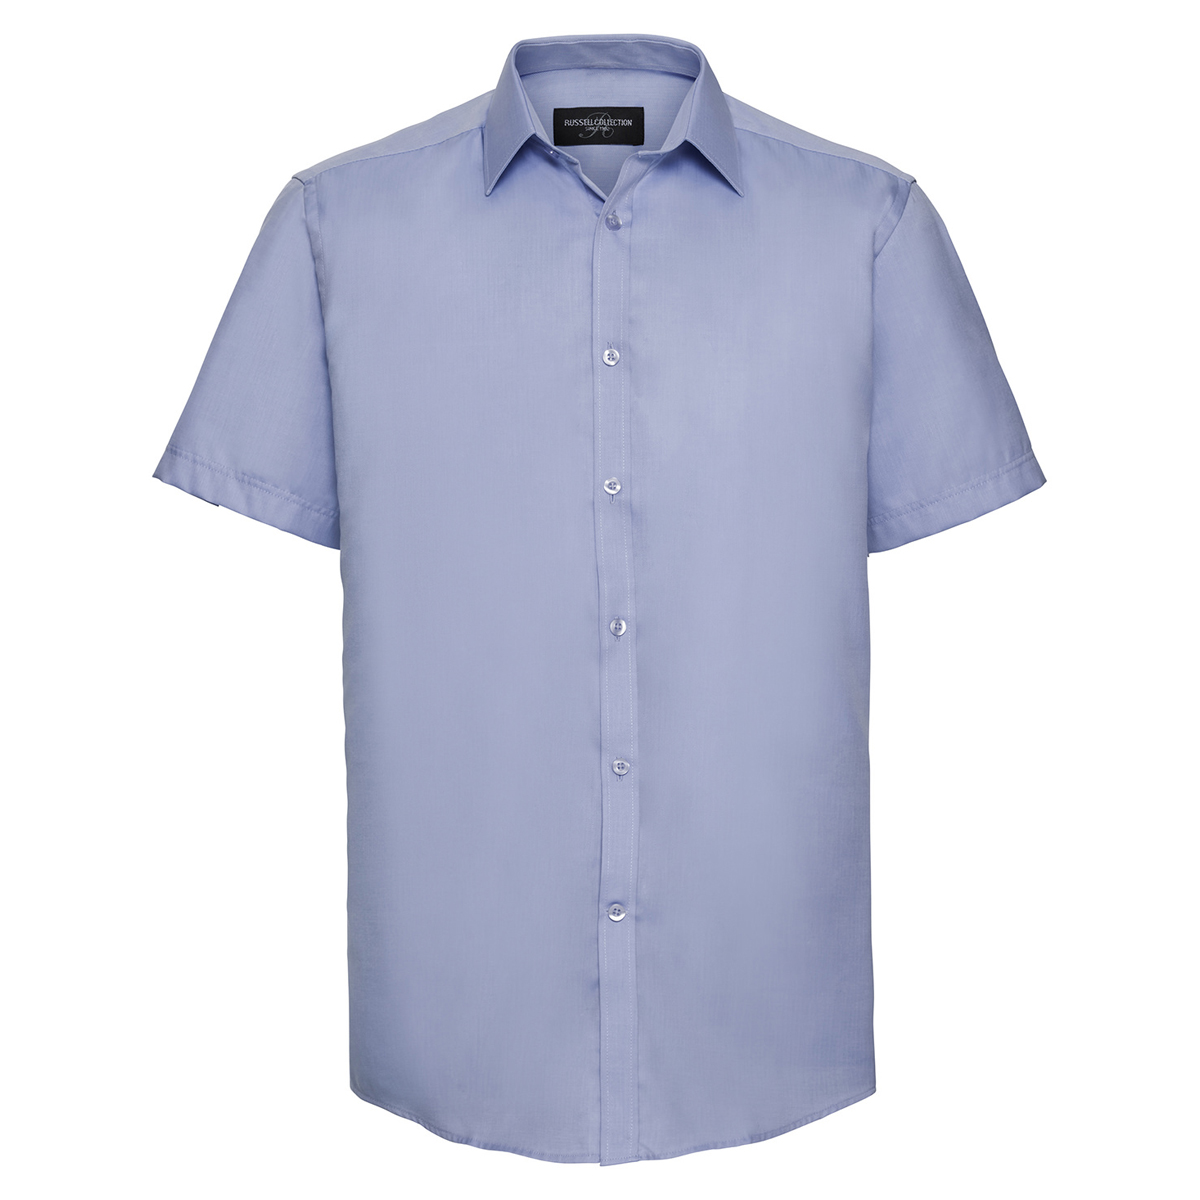 J963m s/s herringbone shirt - light blue - 16 